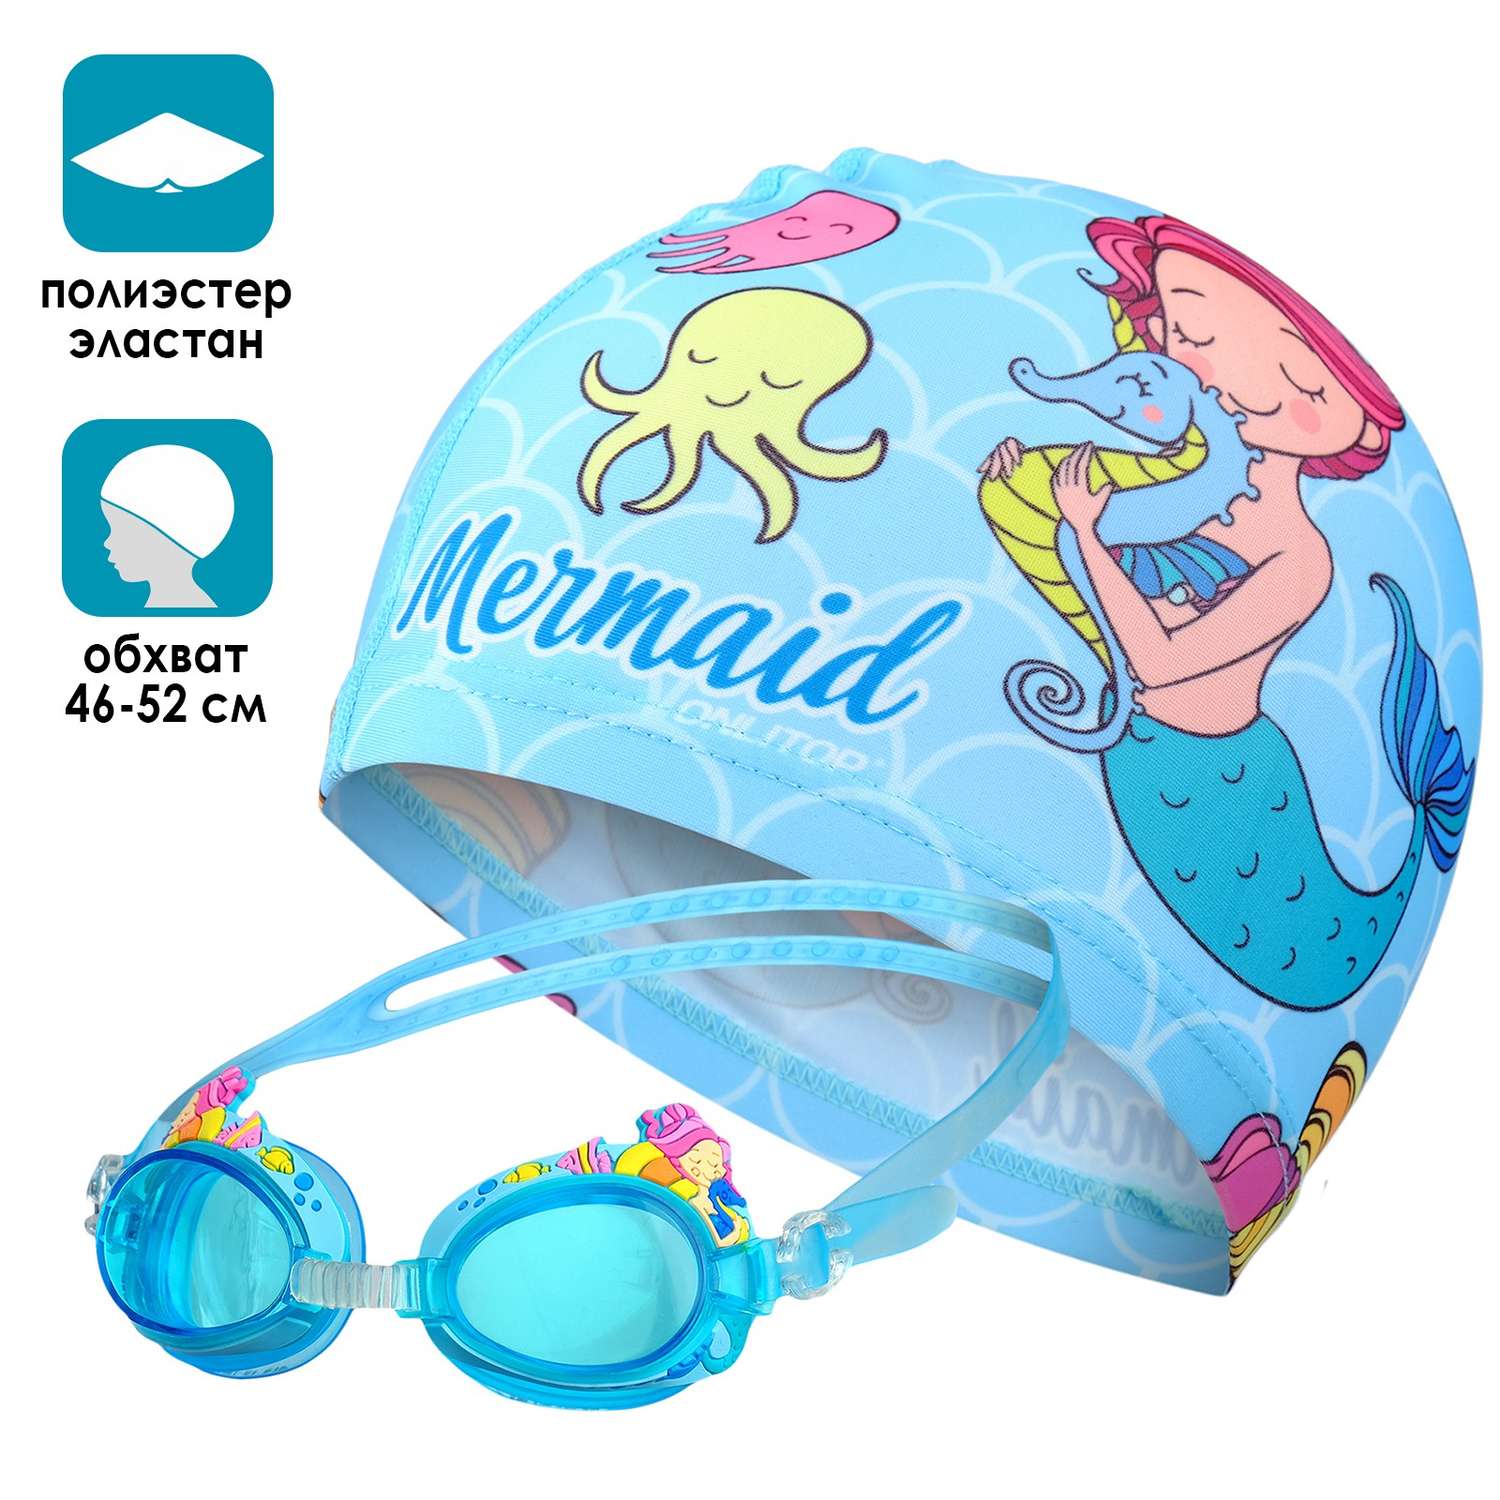 Набор для плавания Sima-Land детский «Русалка» шапочка очки мешок - фото 2